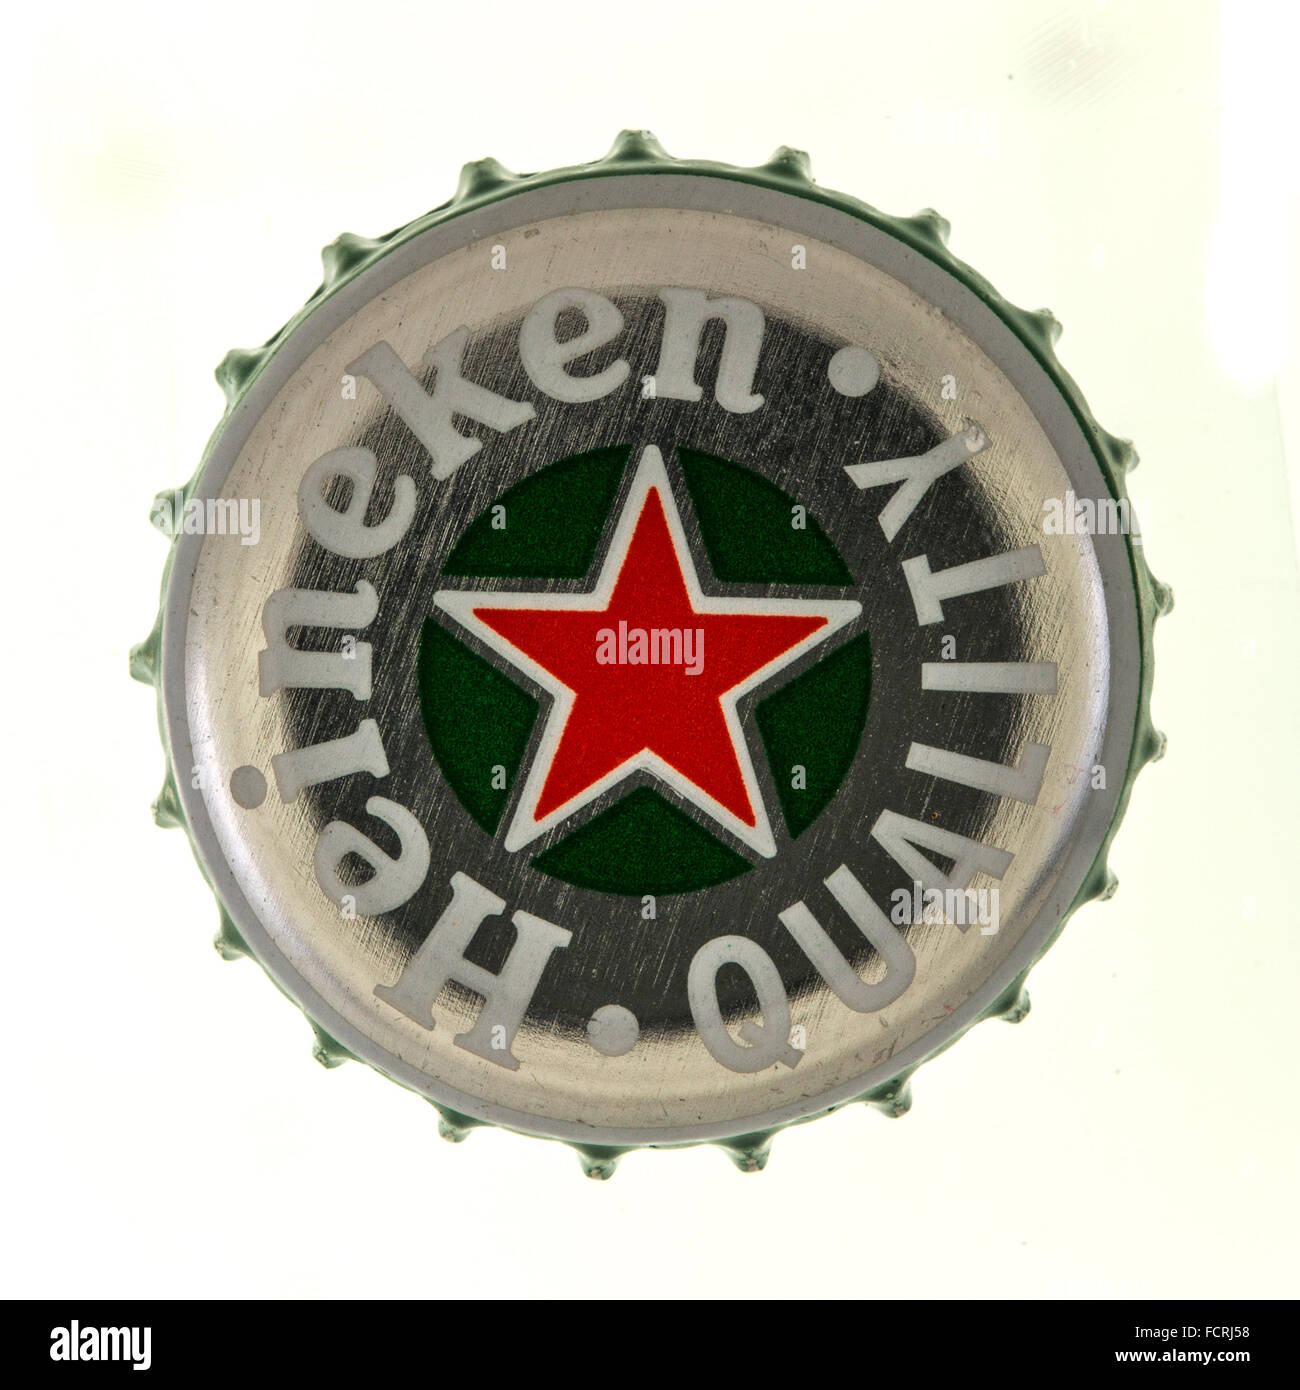 Heineken Beer Bottle Top on a White Background Stock Photo